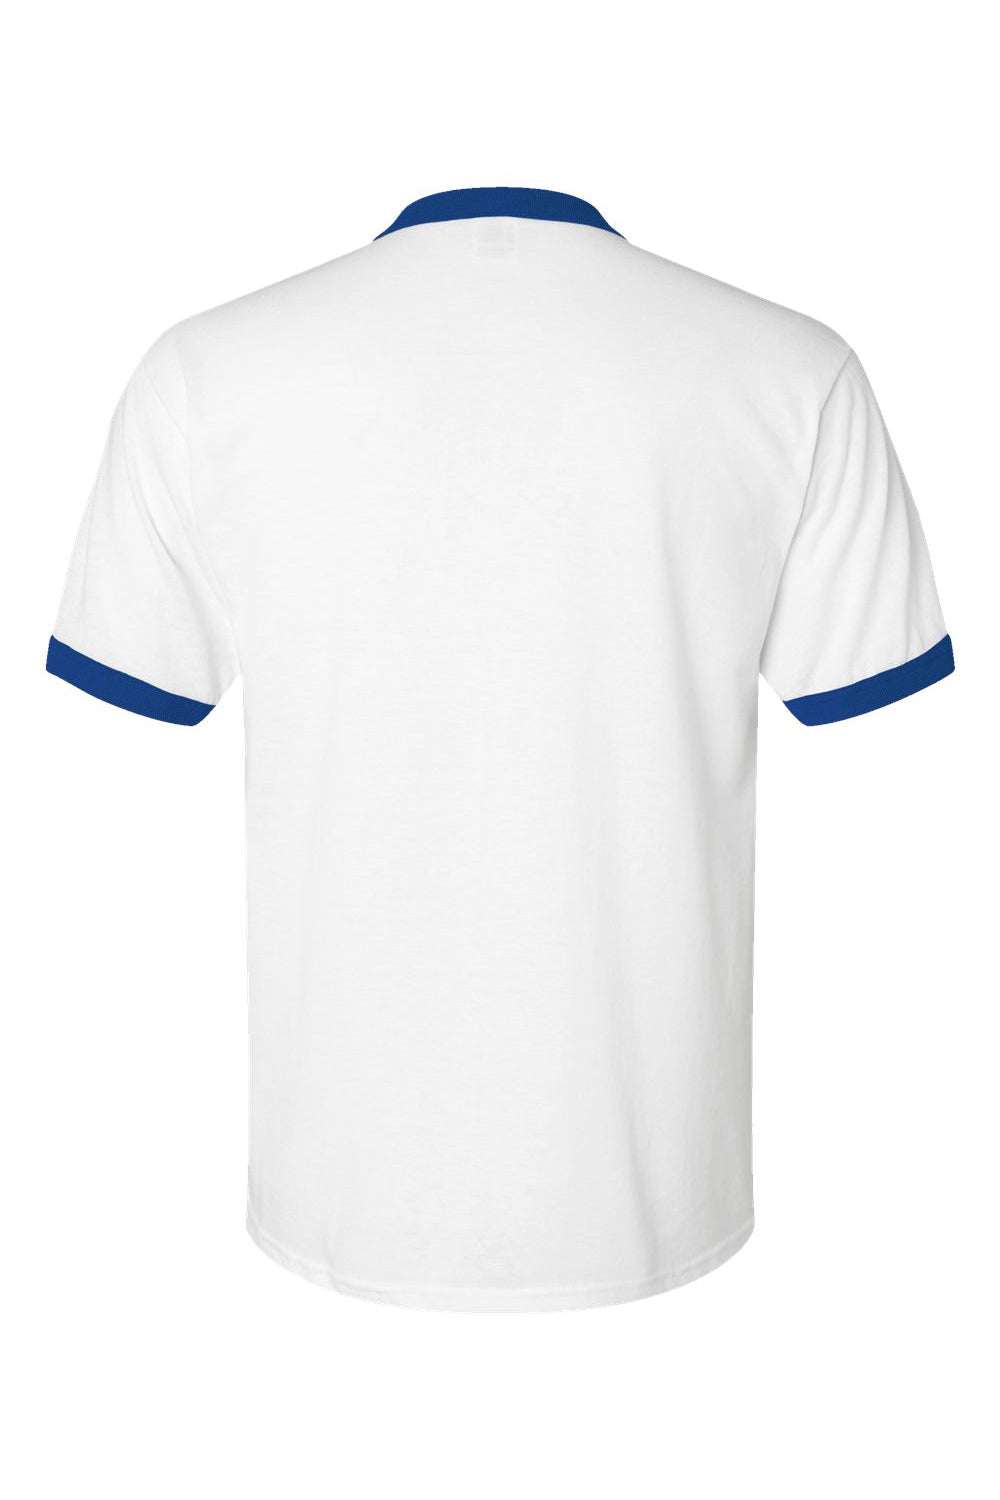 Augusta Sportswear 710 Mens Ringer Short Sleeve Crewneck T-Shirt White/Royal Flat Back